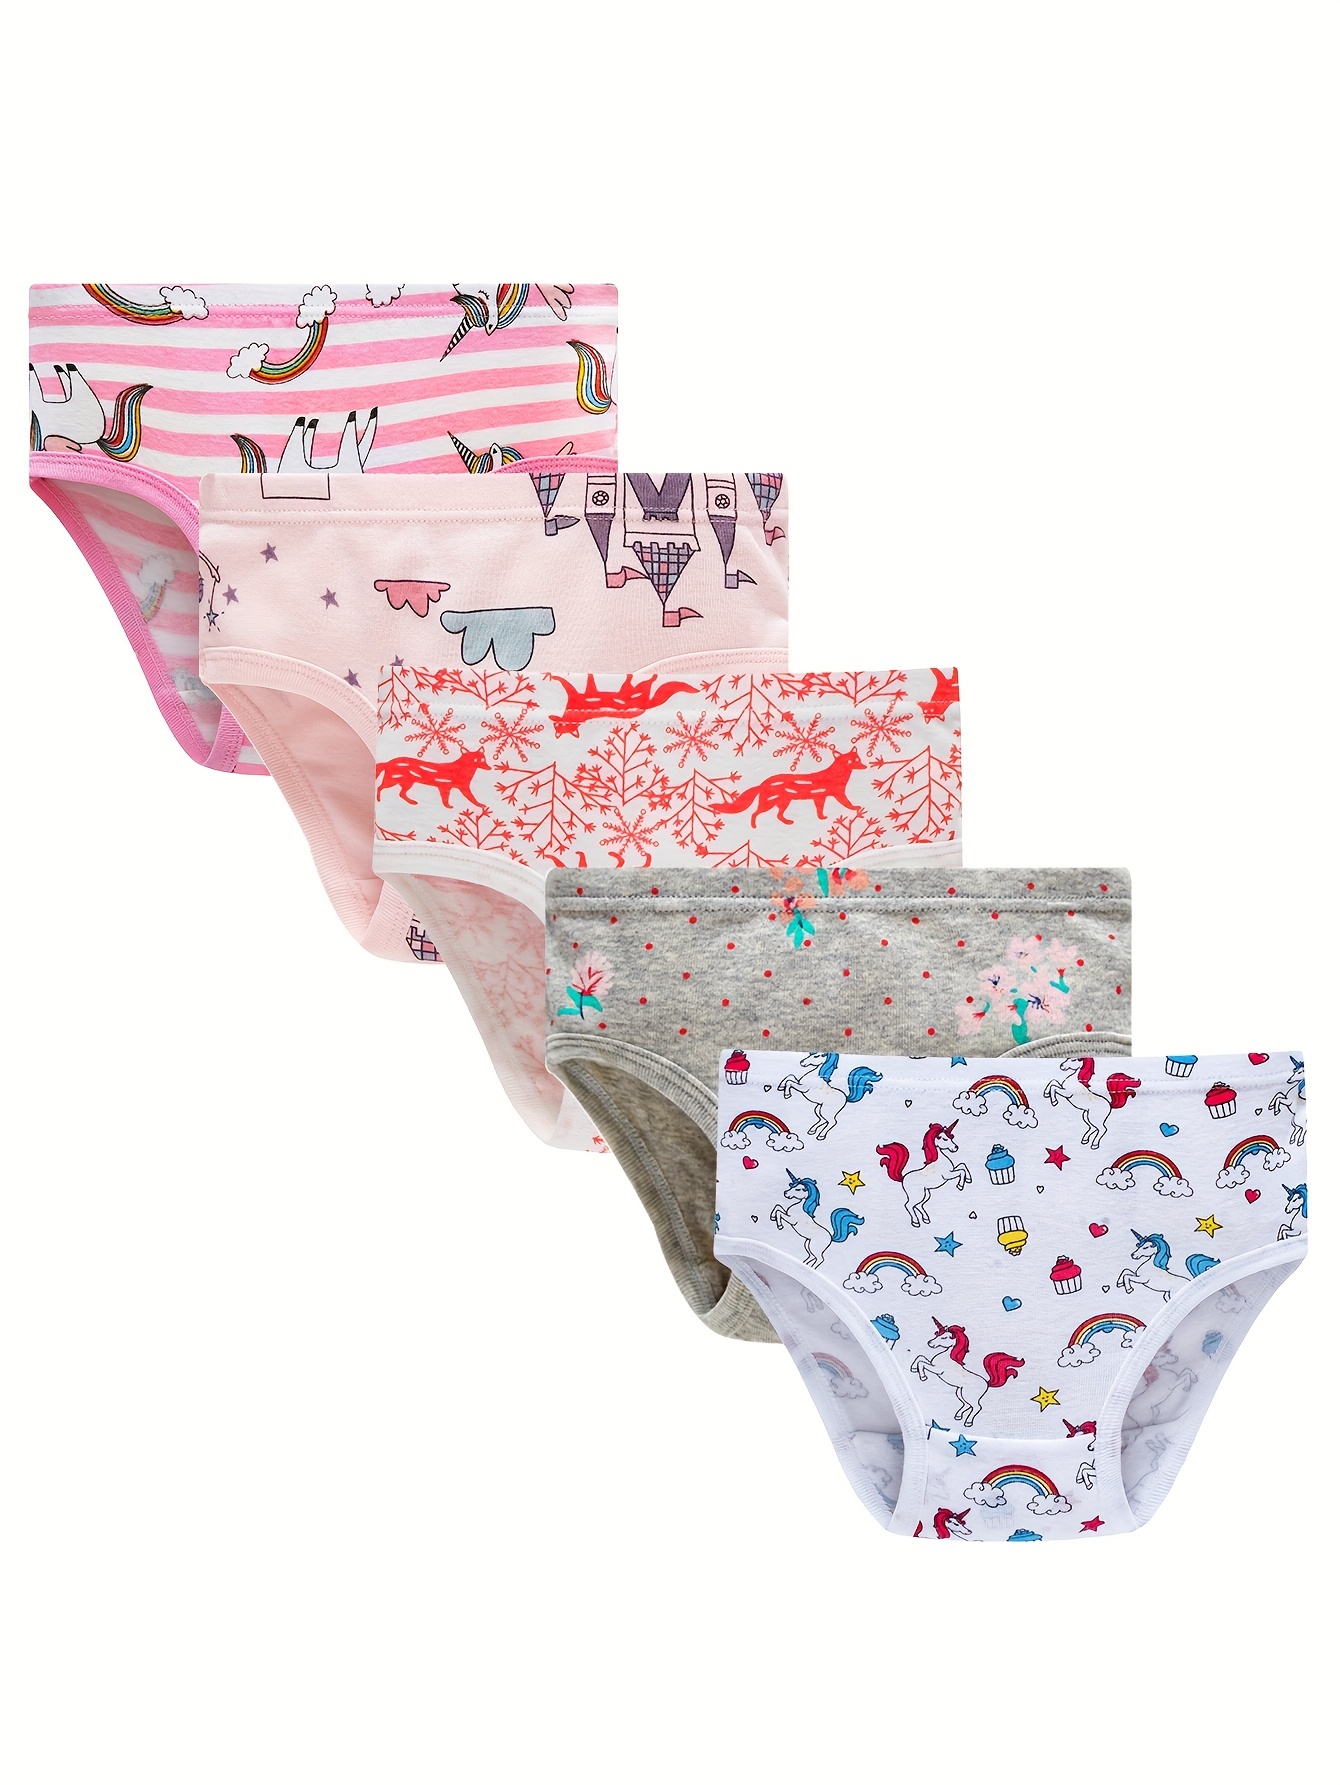 Little Girls Panties Toddler Panties Big Kids Underwear Soft